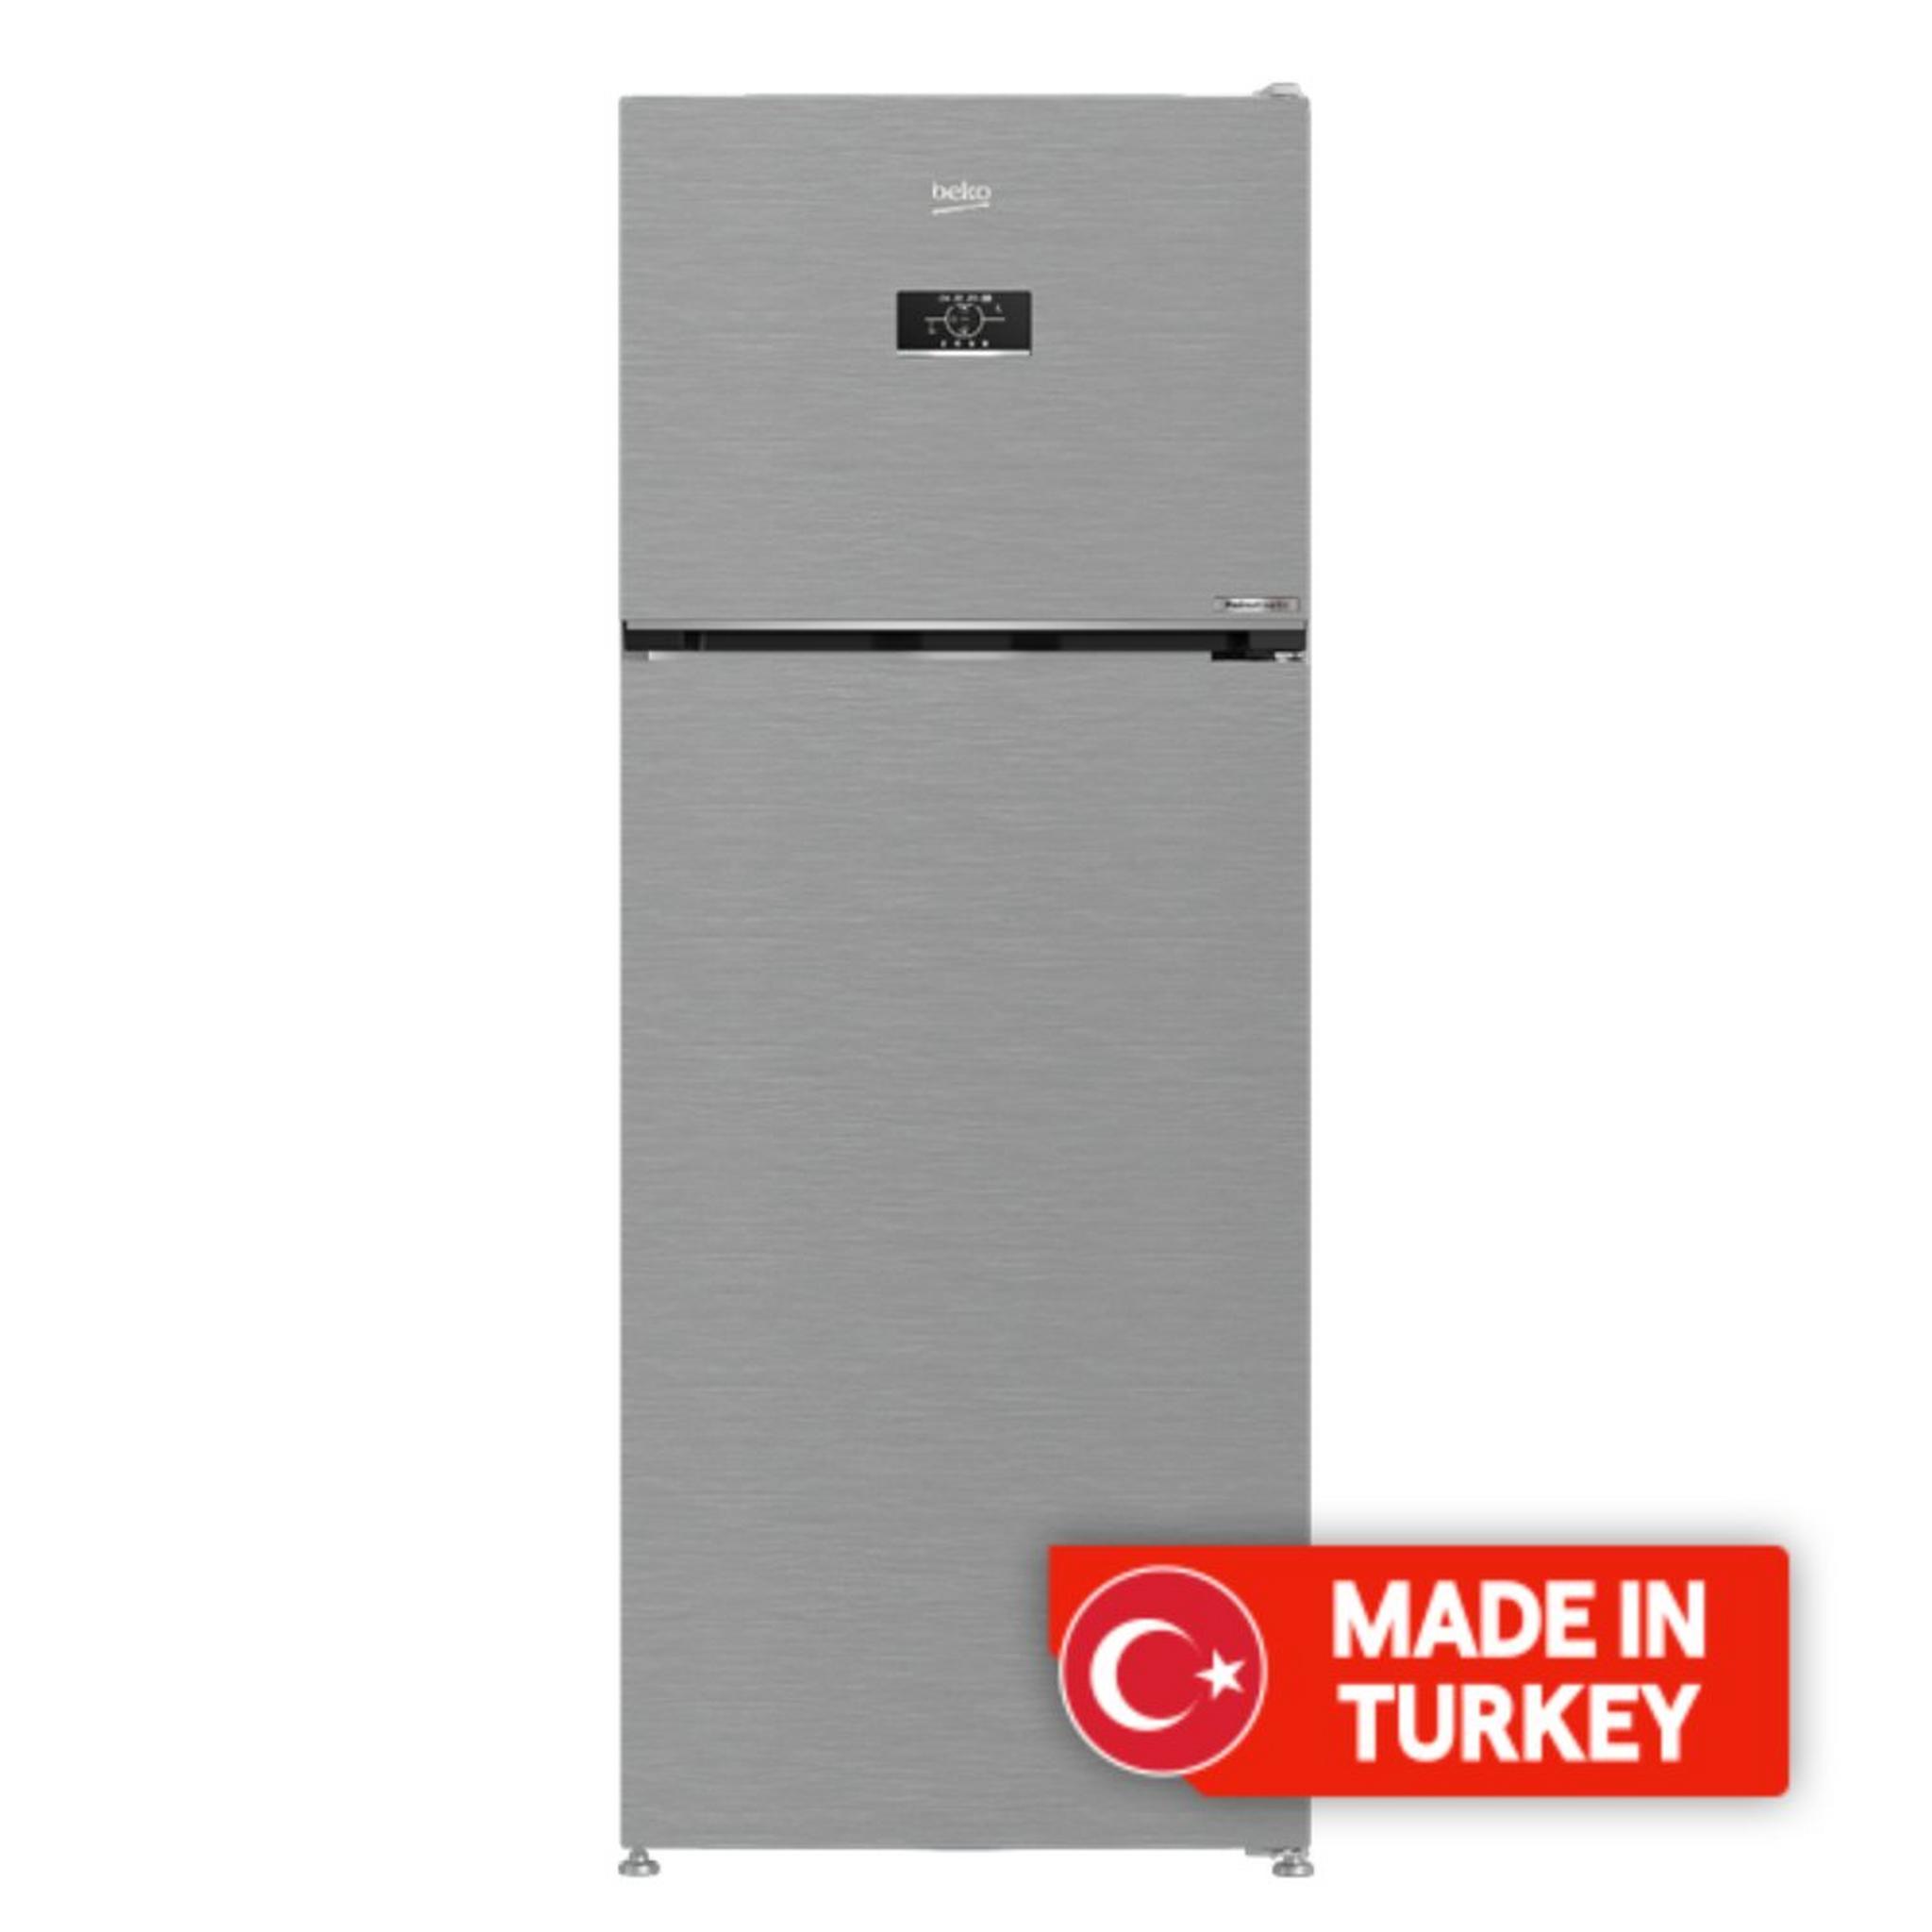 BEKO Top Mount Refrigerator, 18 CFT, 506 L, RDNE650S – Silver